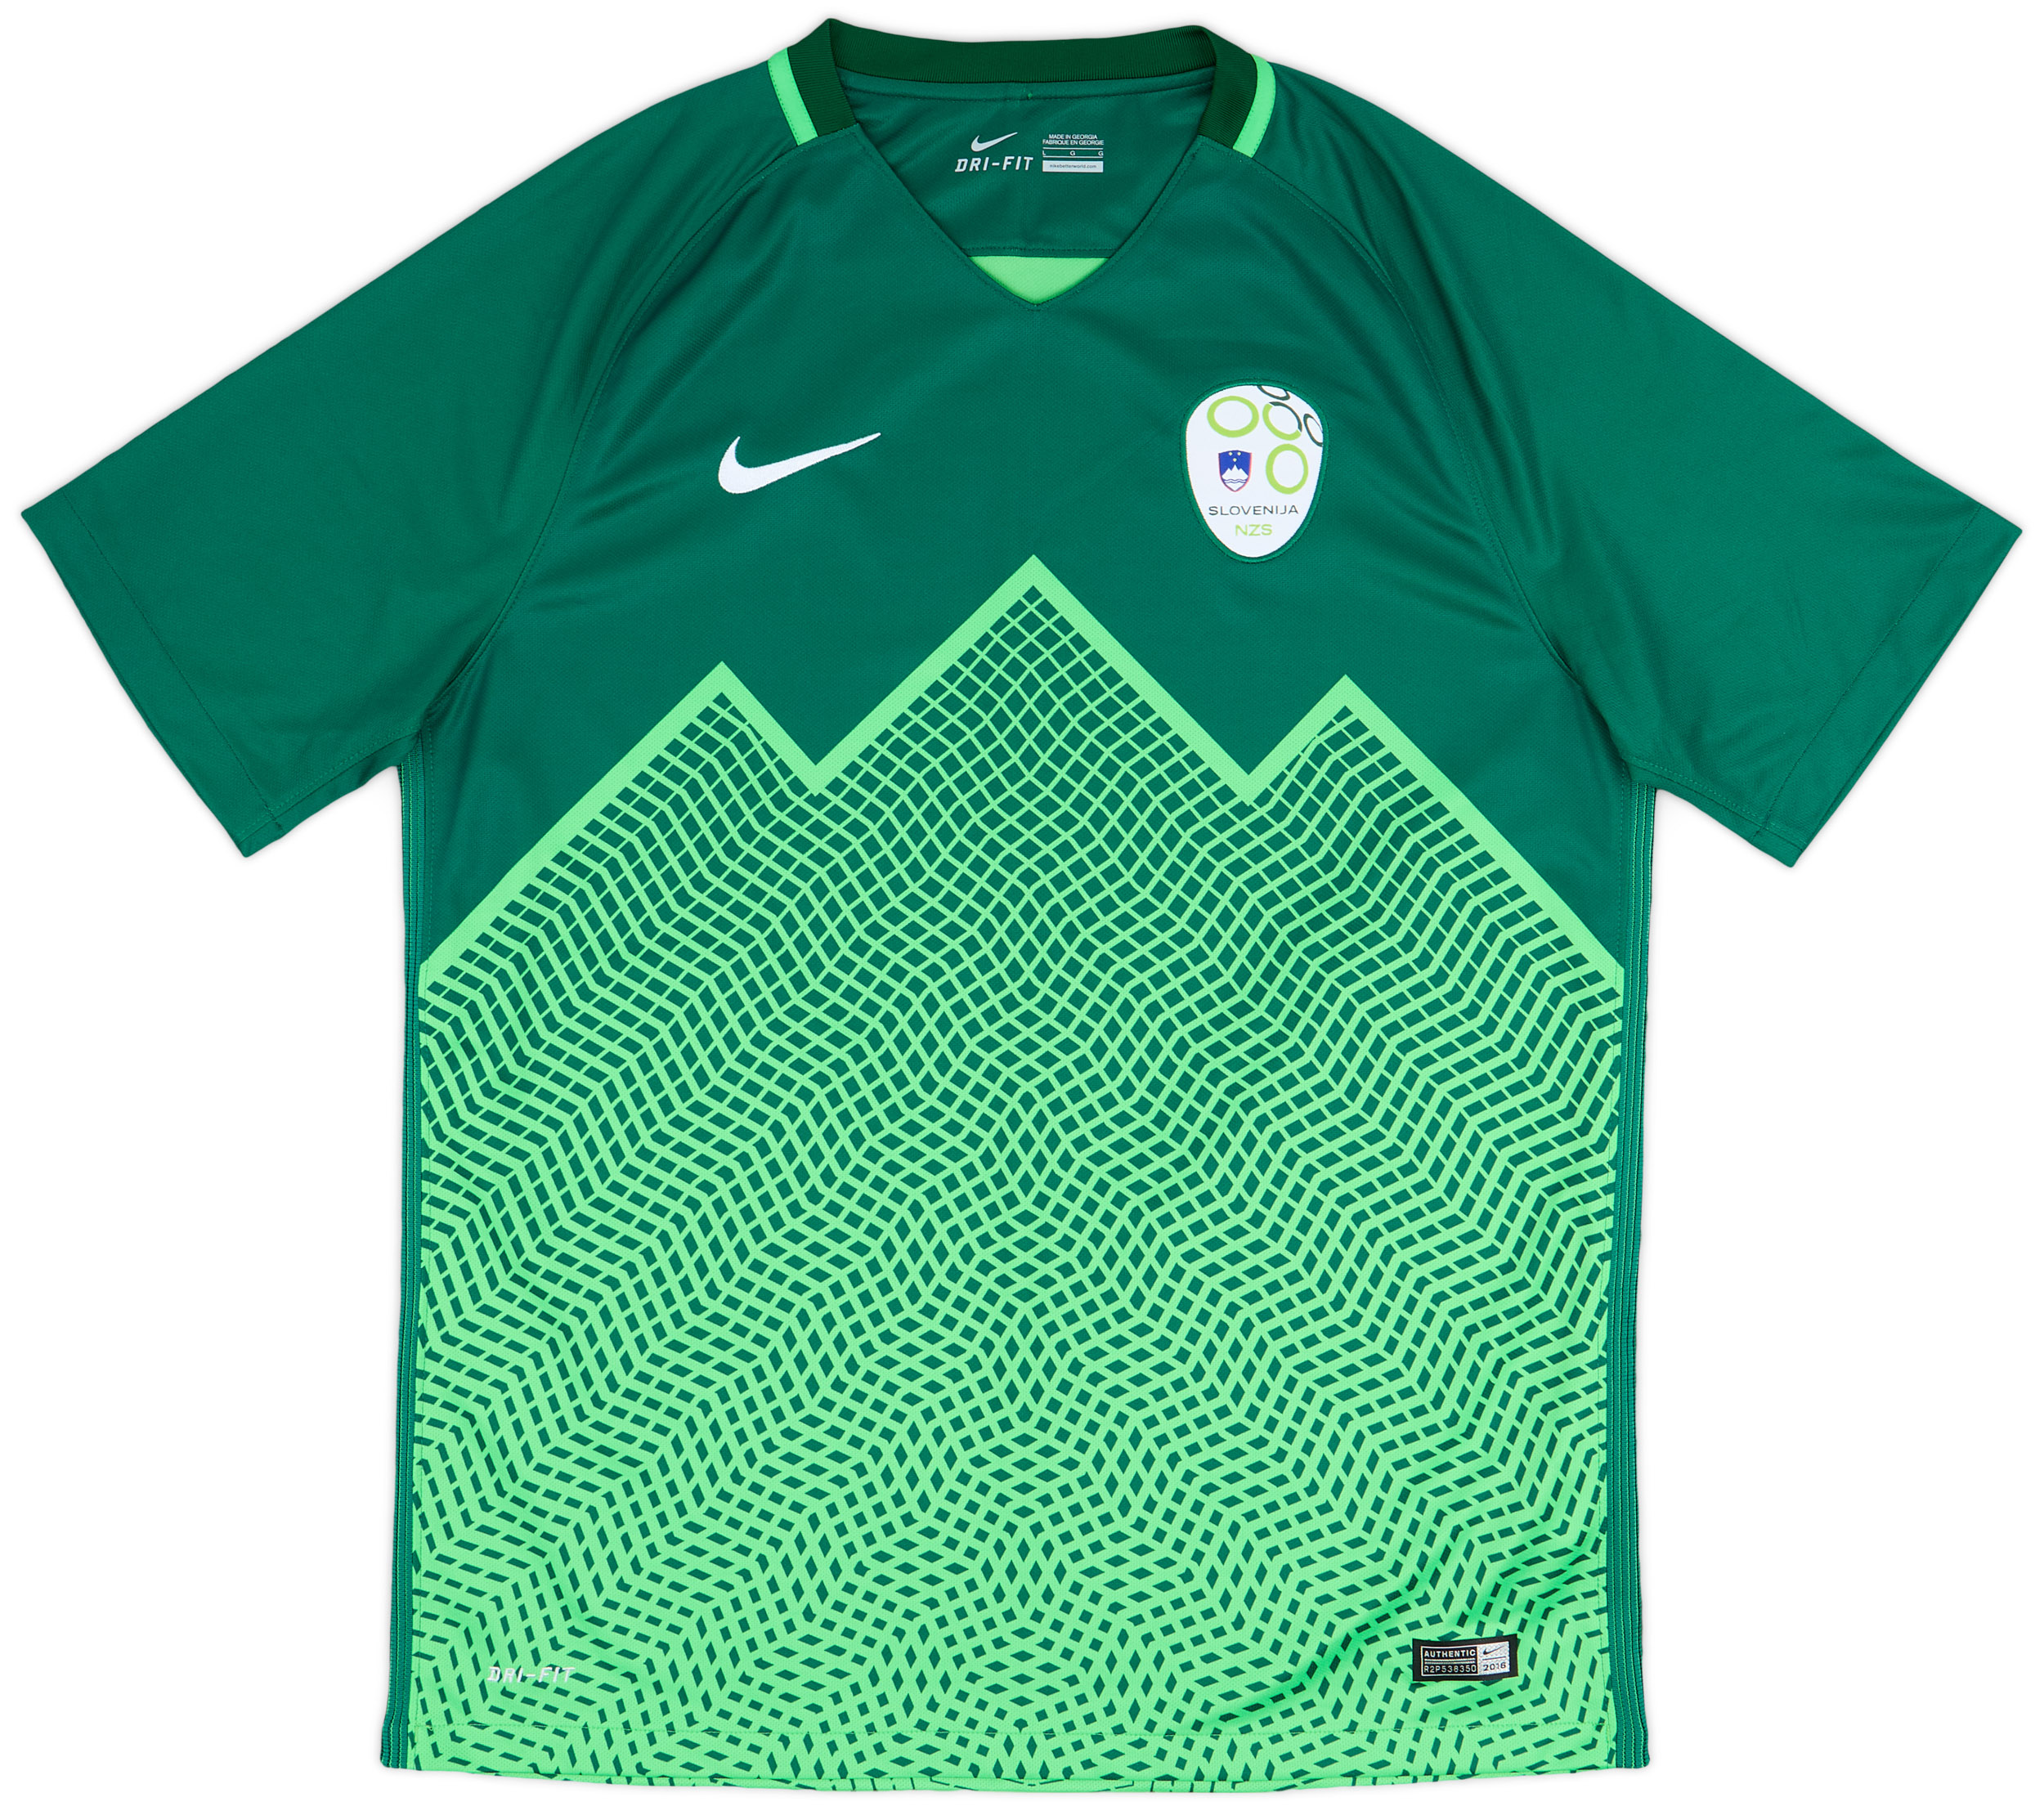 2016-17 Slovenia Away Shirt - 10/10 - ()